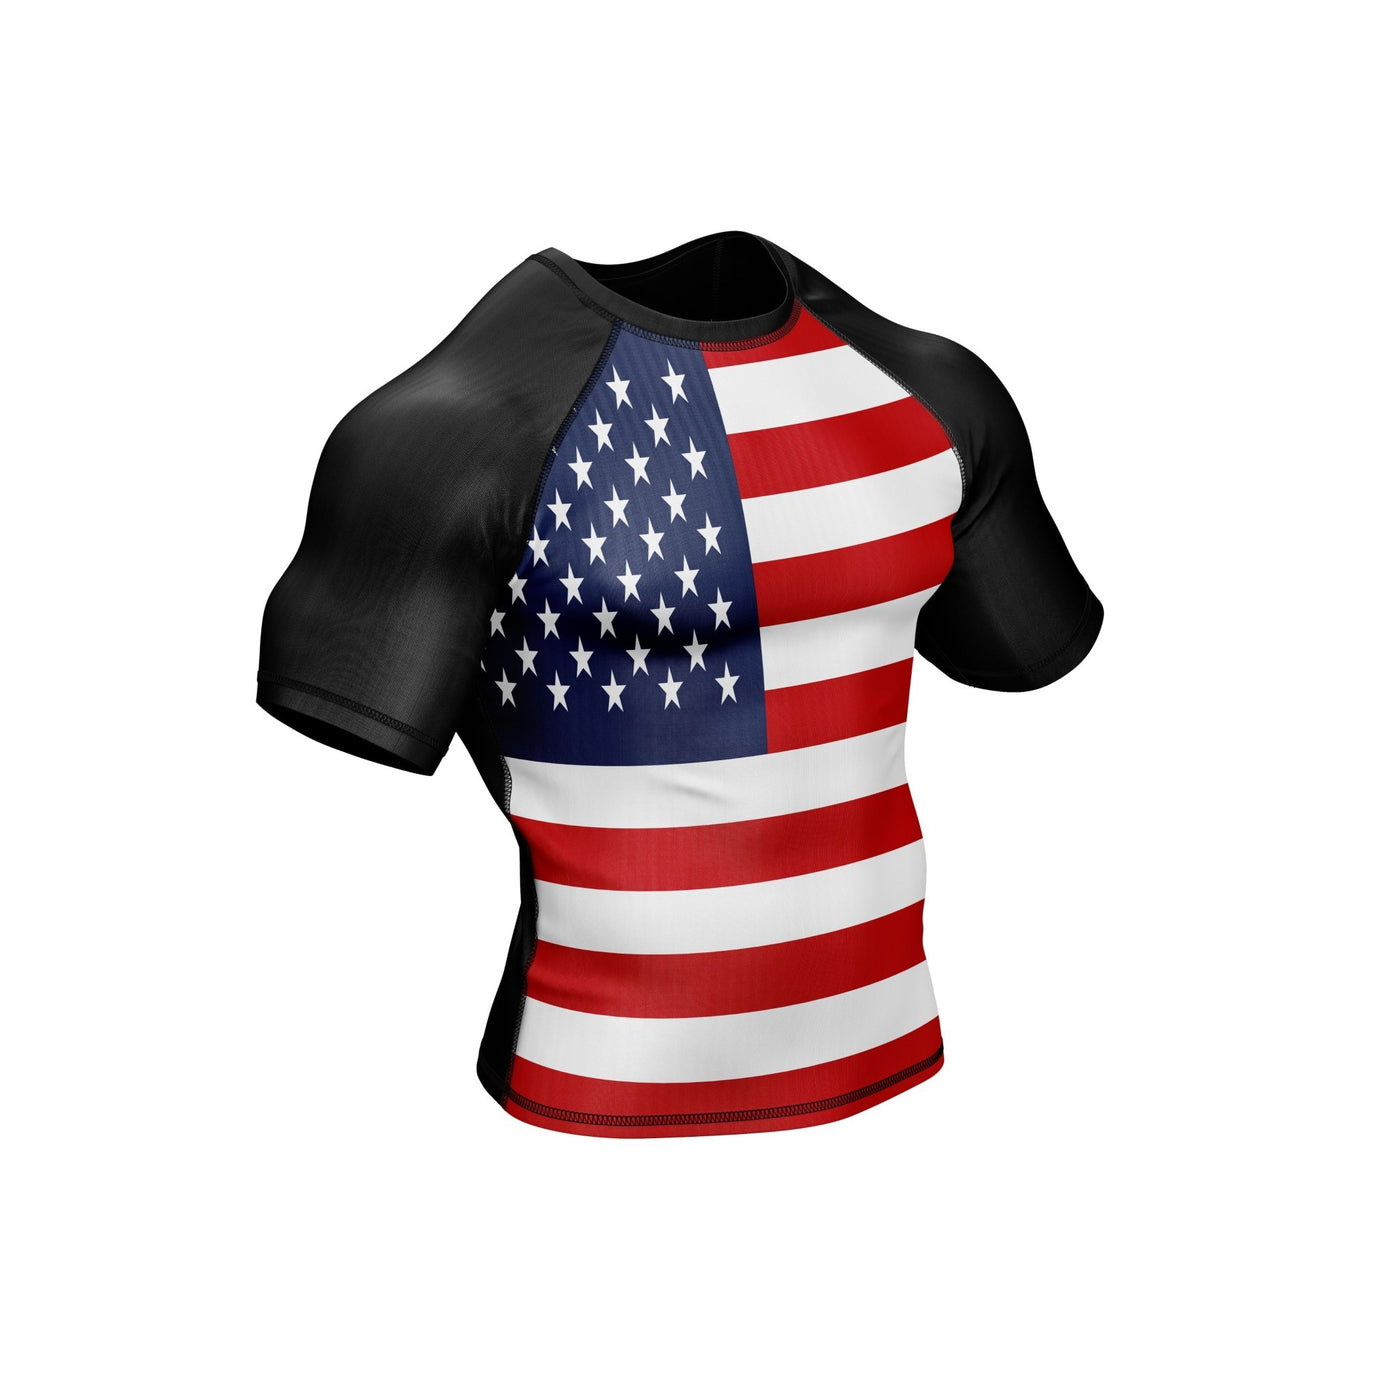 American Patriotic Rash Guard For Men/Women - Summo Sports